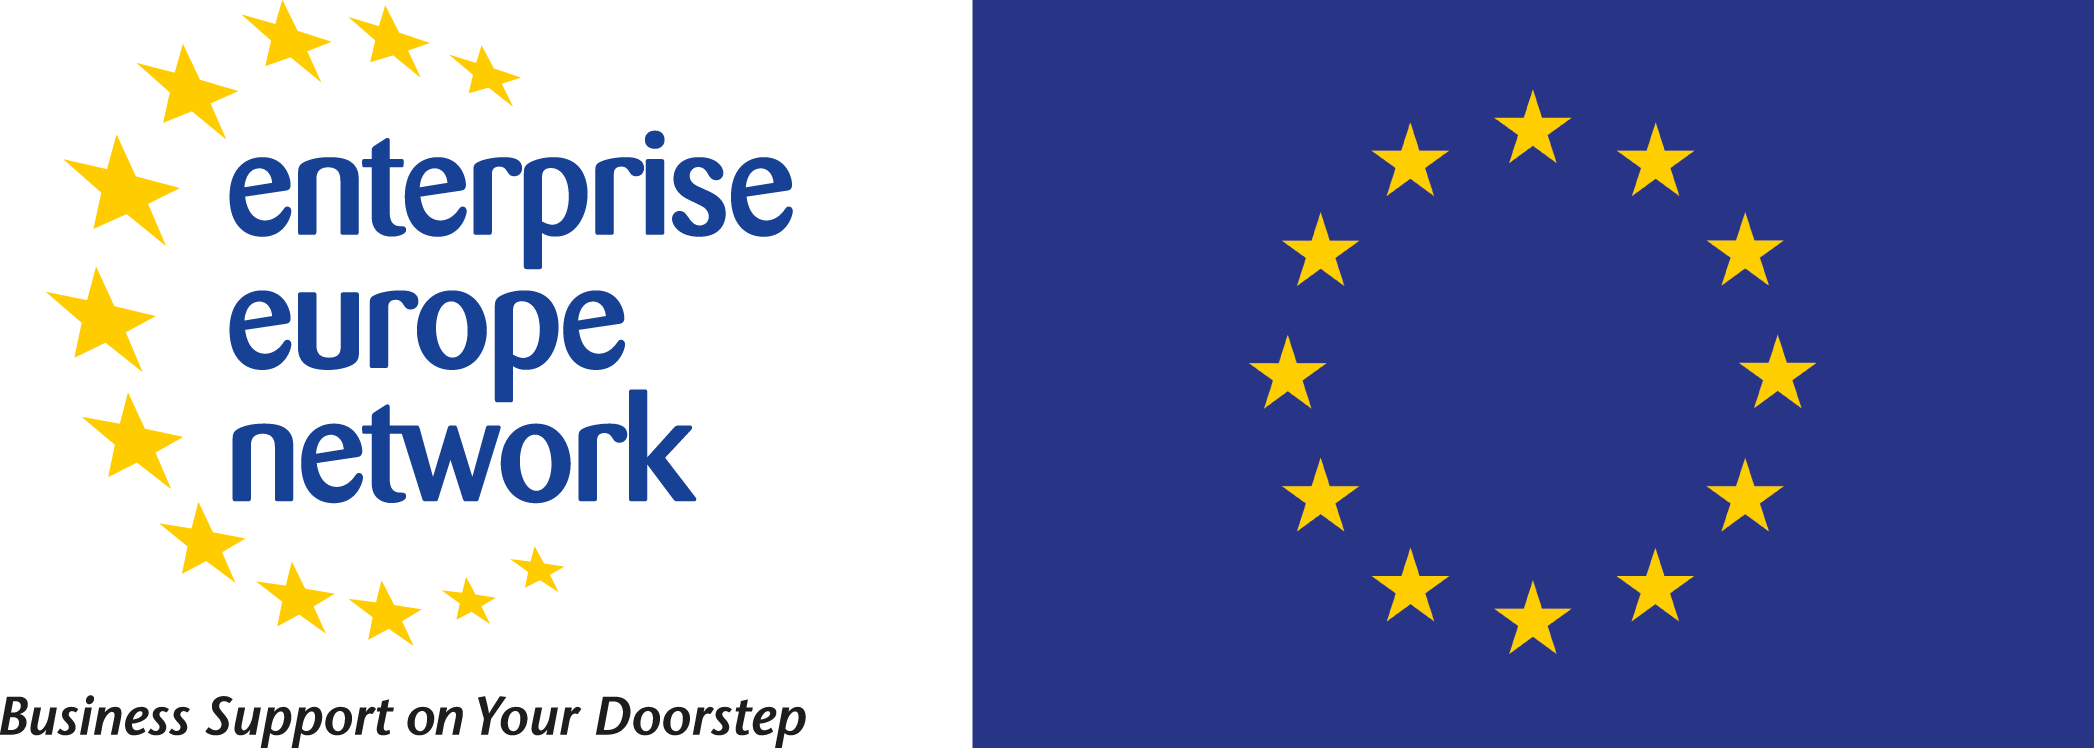 Enterprise Europe Network logotyp och EU-flagga